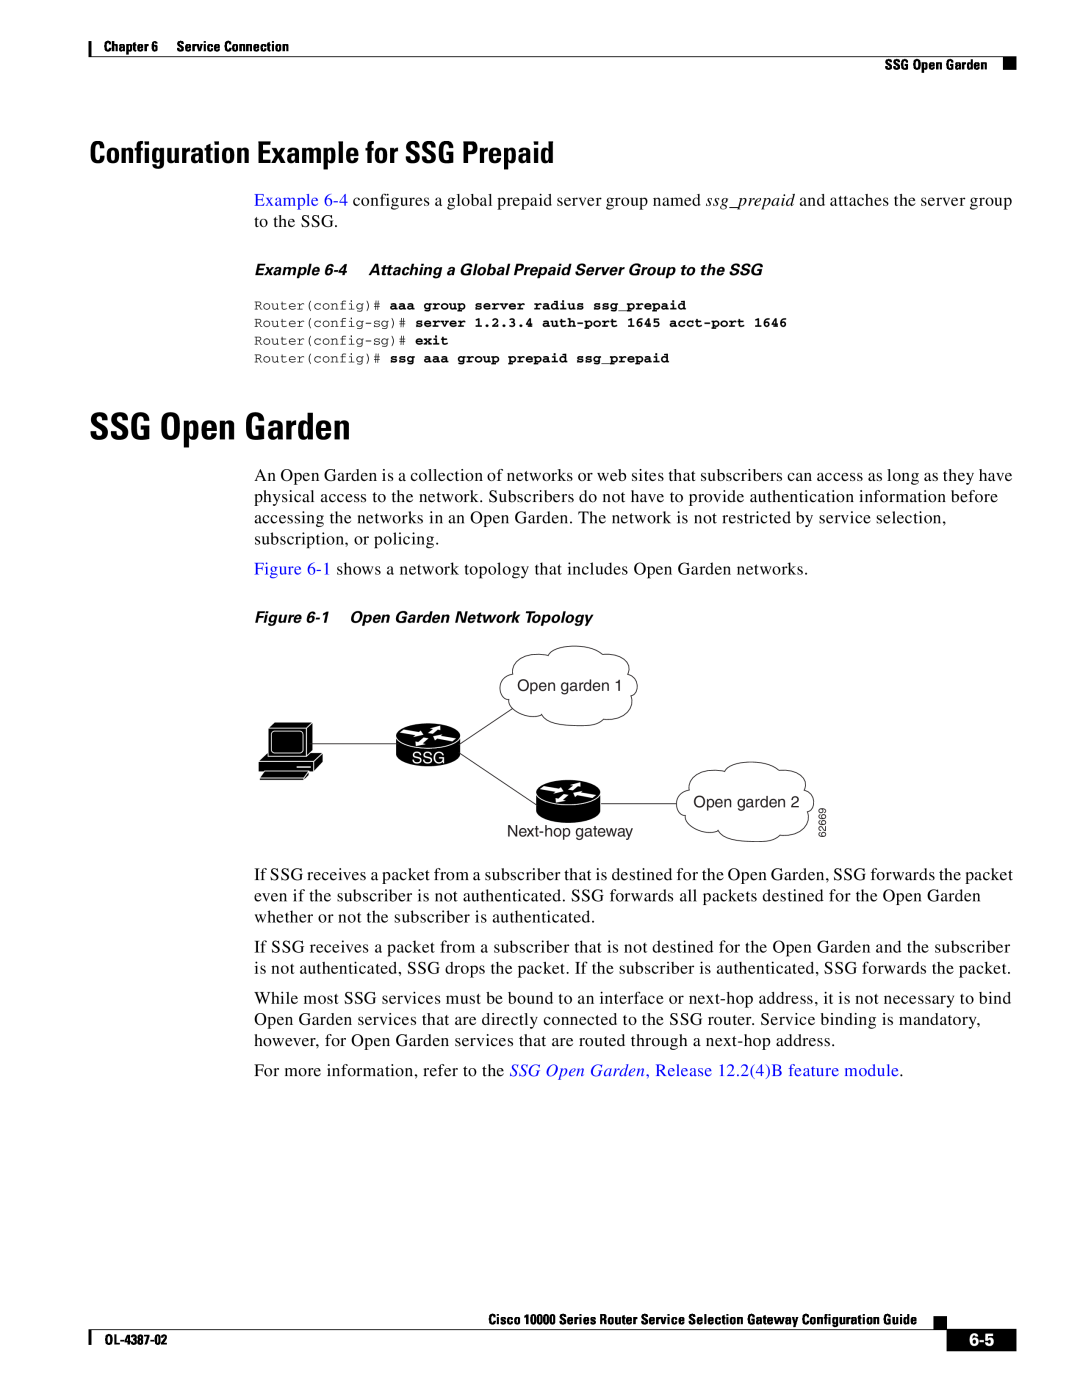 Cisco Systems OL-4387-02 manual SSG Open Garden, Configuration Example for SSG Prepaid 